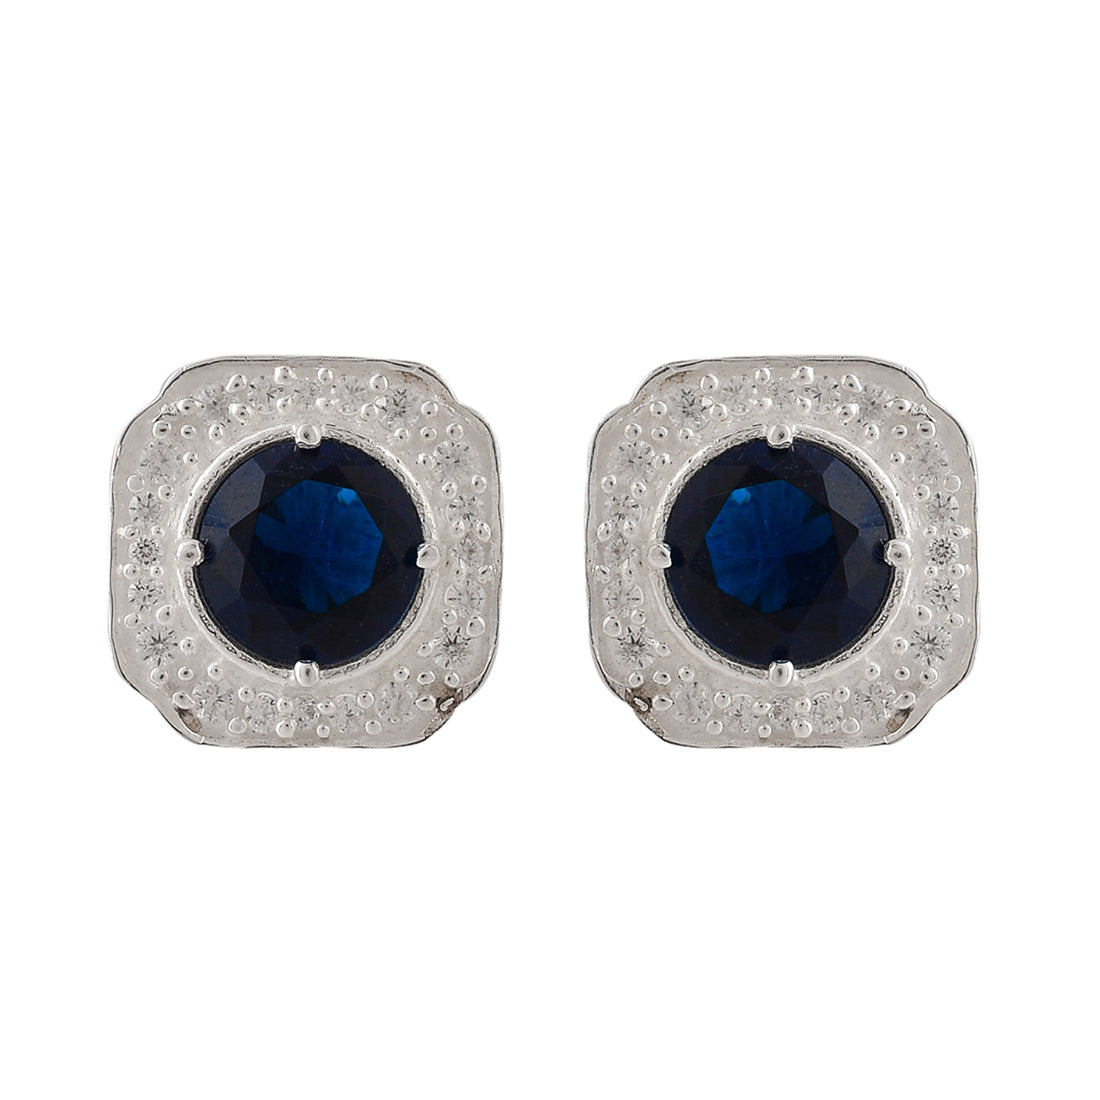 Women's Oval Cut Sapphire And Zirconia Adorned 925 Sterling Silver Stud Earrings - Voylla